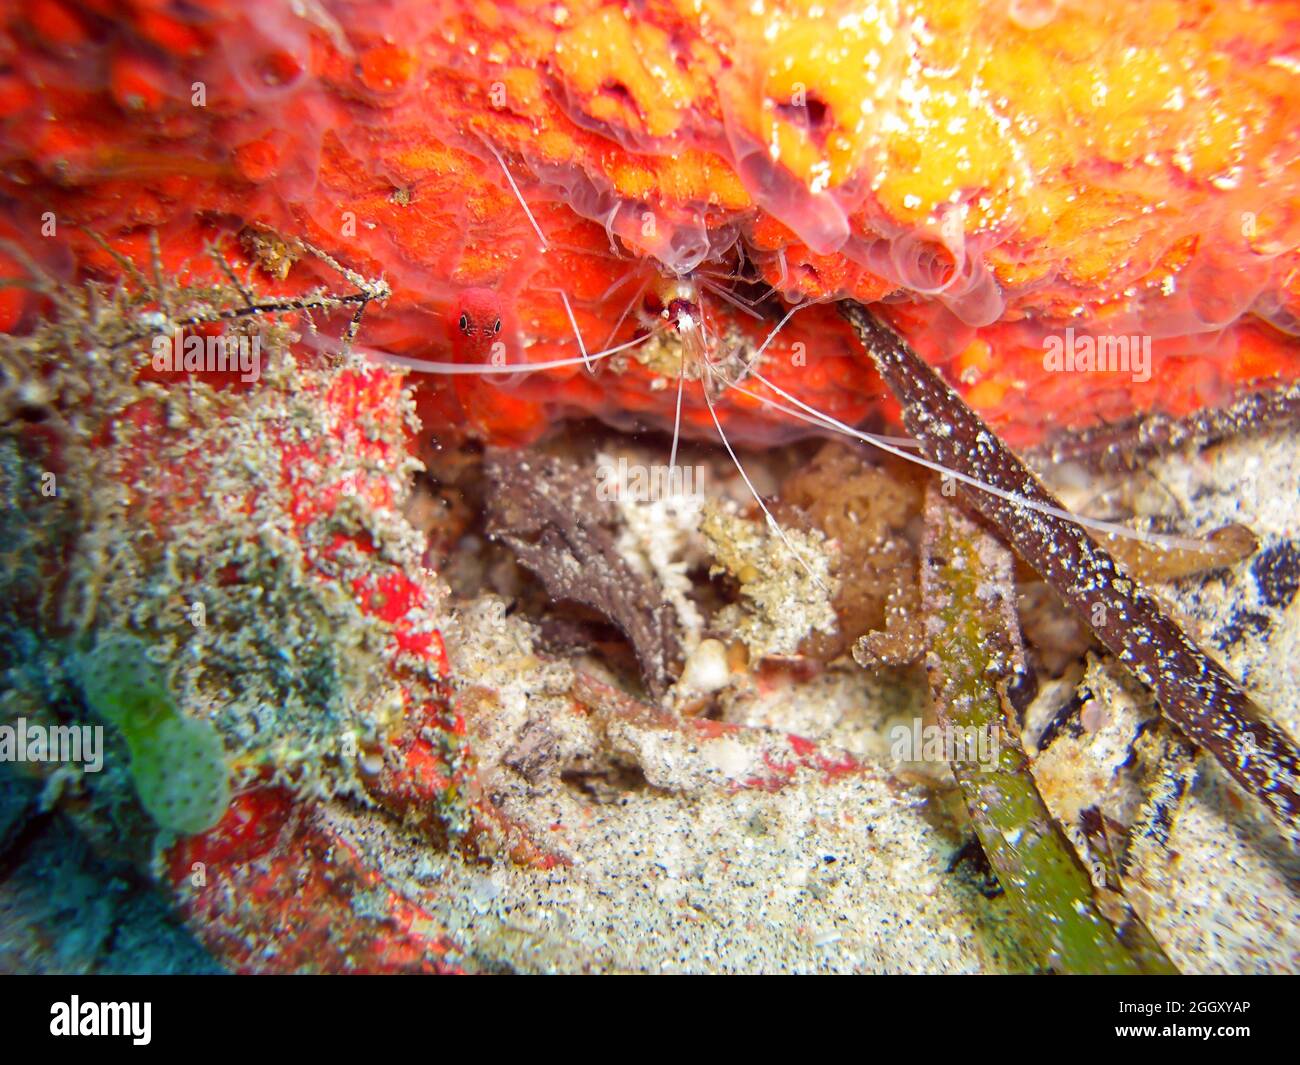 Anemone Shrimp on the ground in the filipino sea 13.1.2012 Stock Photo